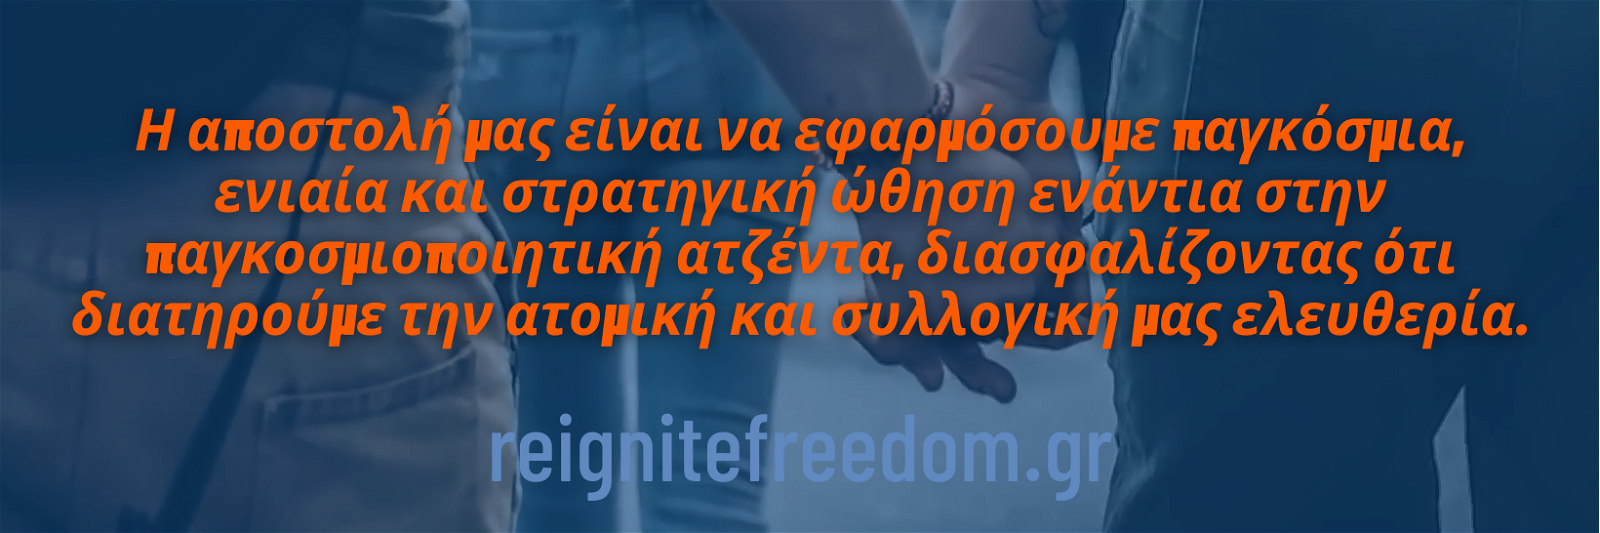 Greece - Reignite Freedom banner picture